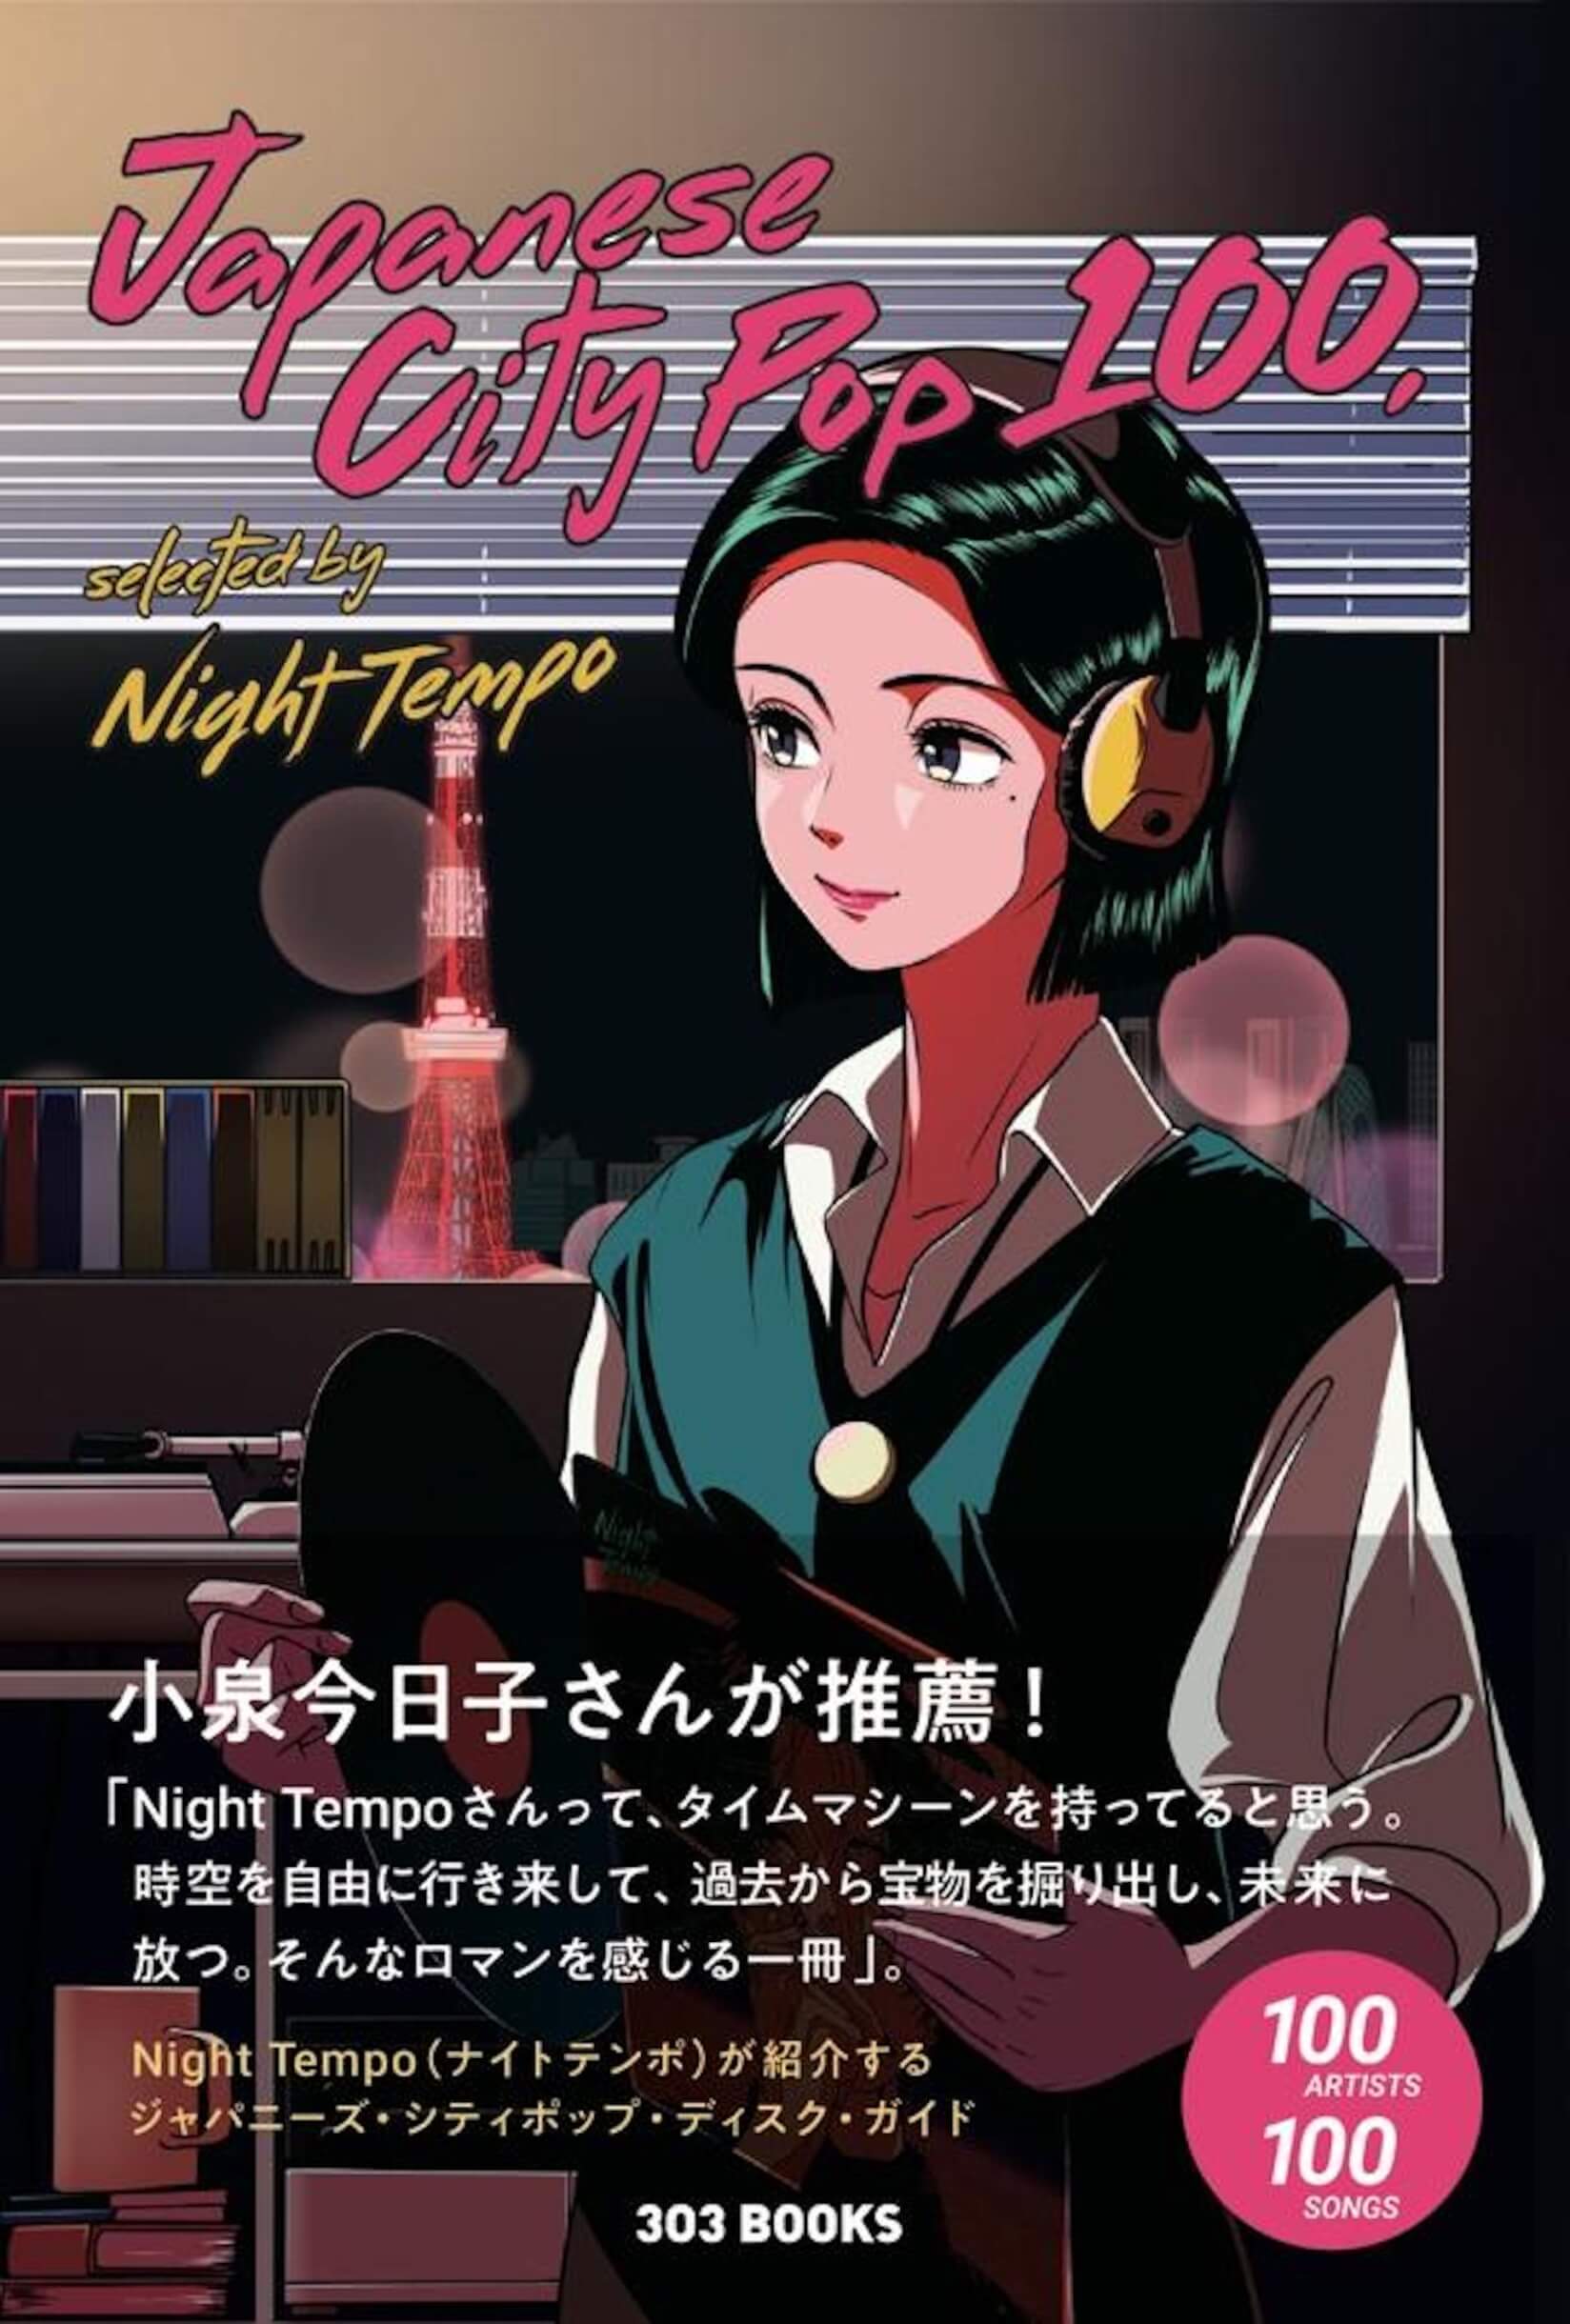 Night Tempoが厳選した100曲を紹介する書籍『Japanese City Pop 100, selected by Night Tempo』が本日発売！ music_220201_nighttempo_04